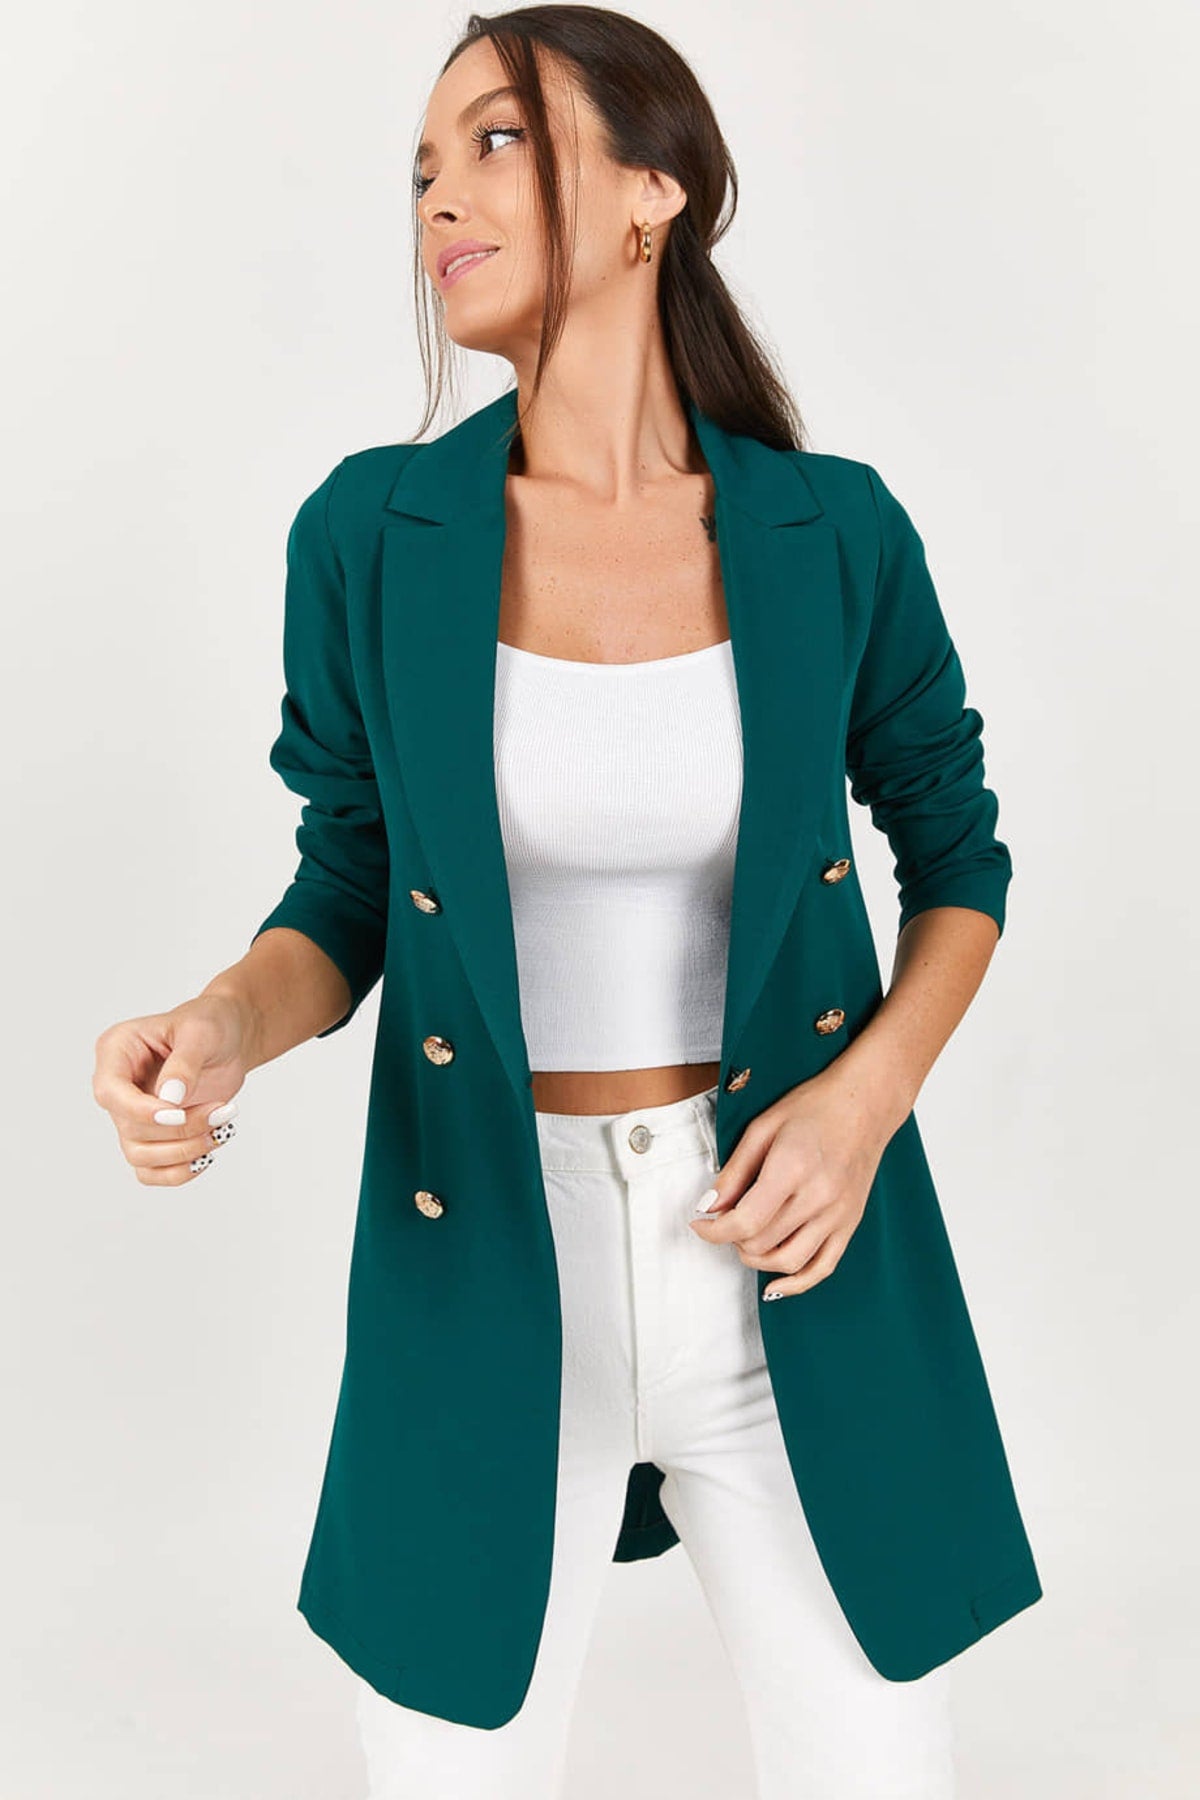 Buttoned woman long jacket dark green